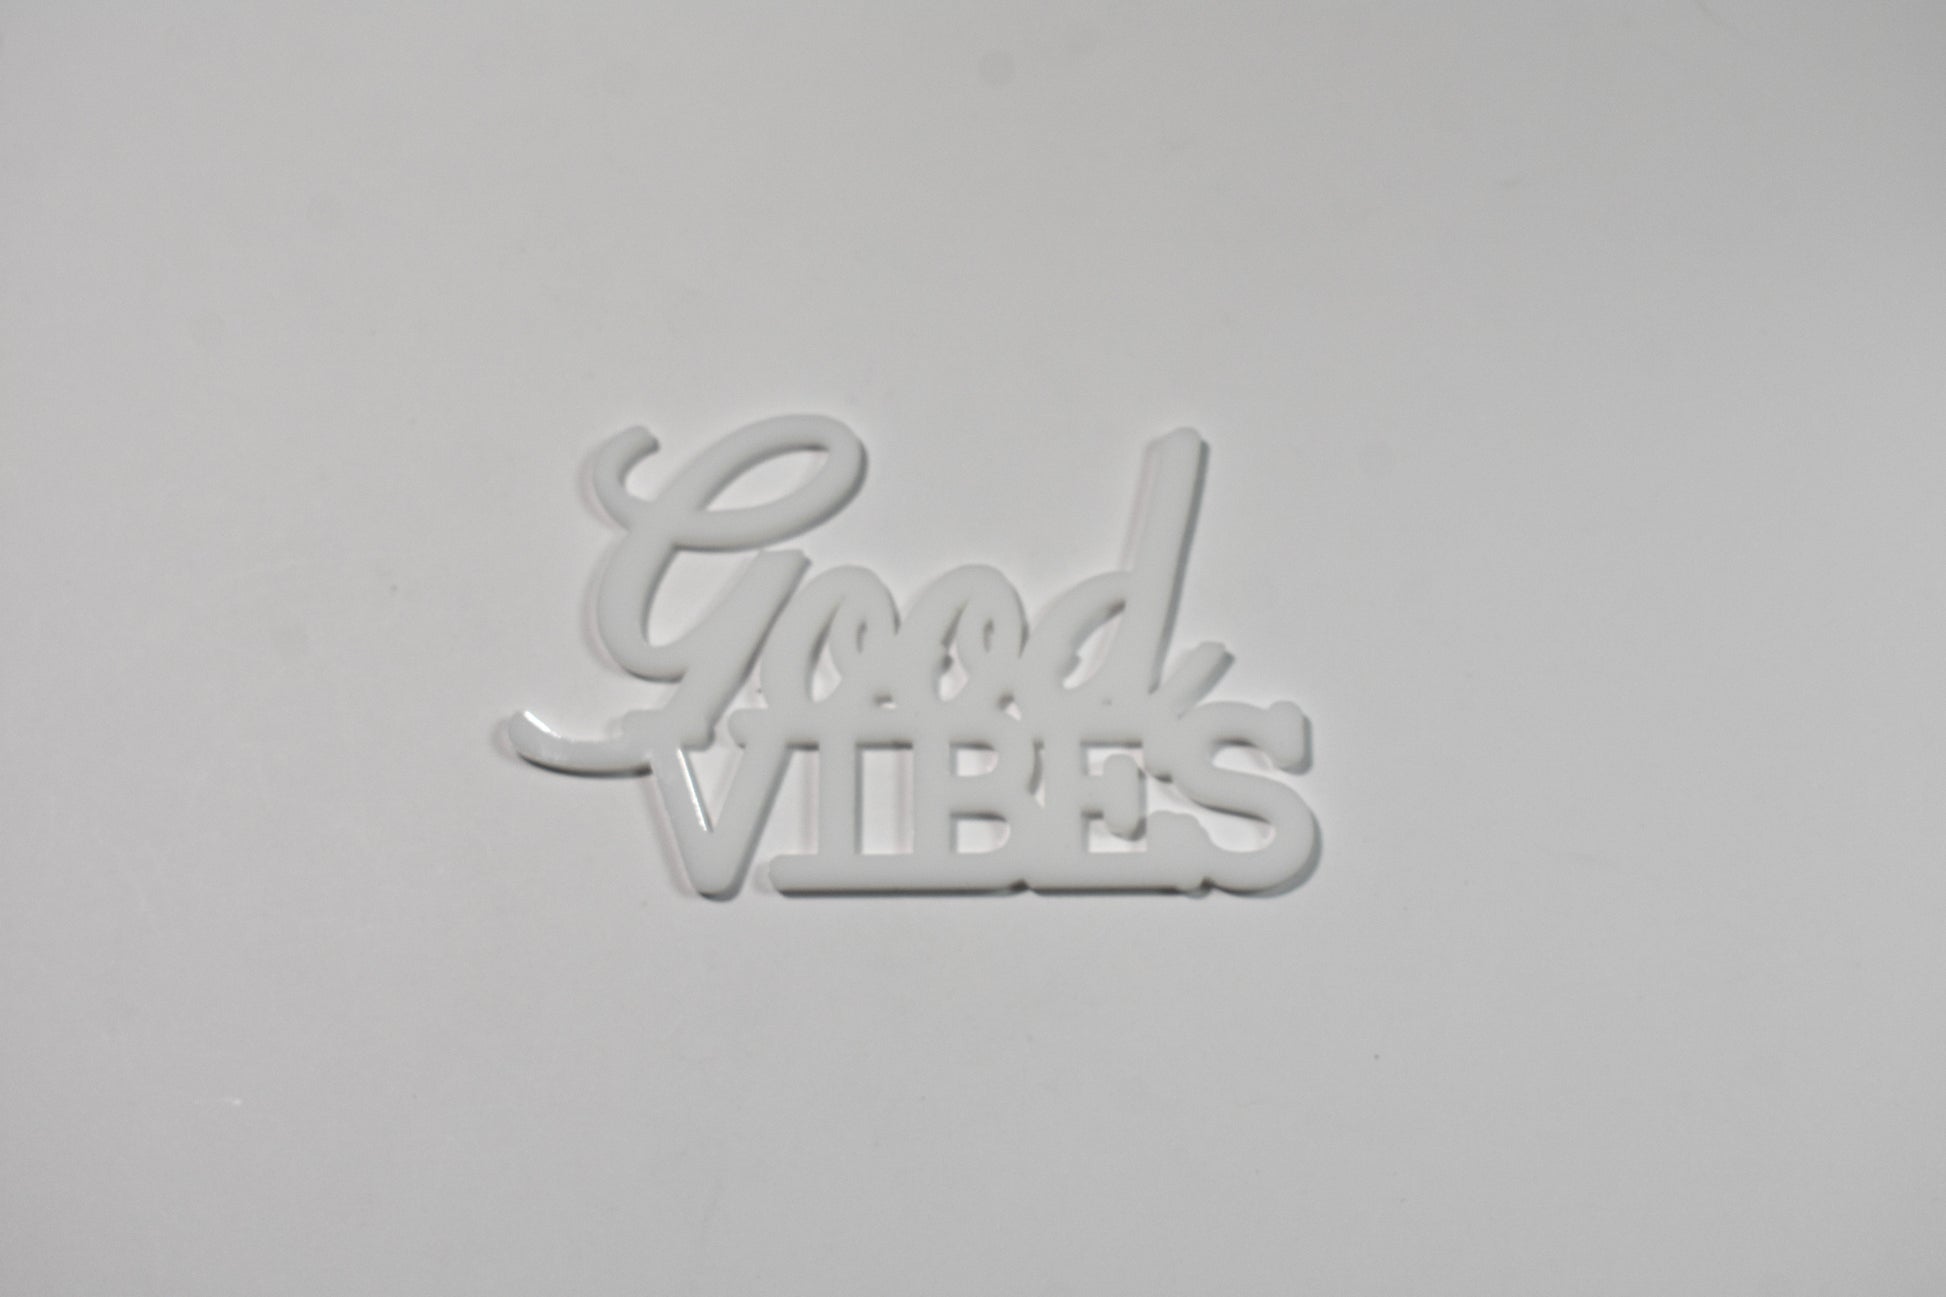 Good Vibes 2 - Creative Designs By Kari